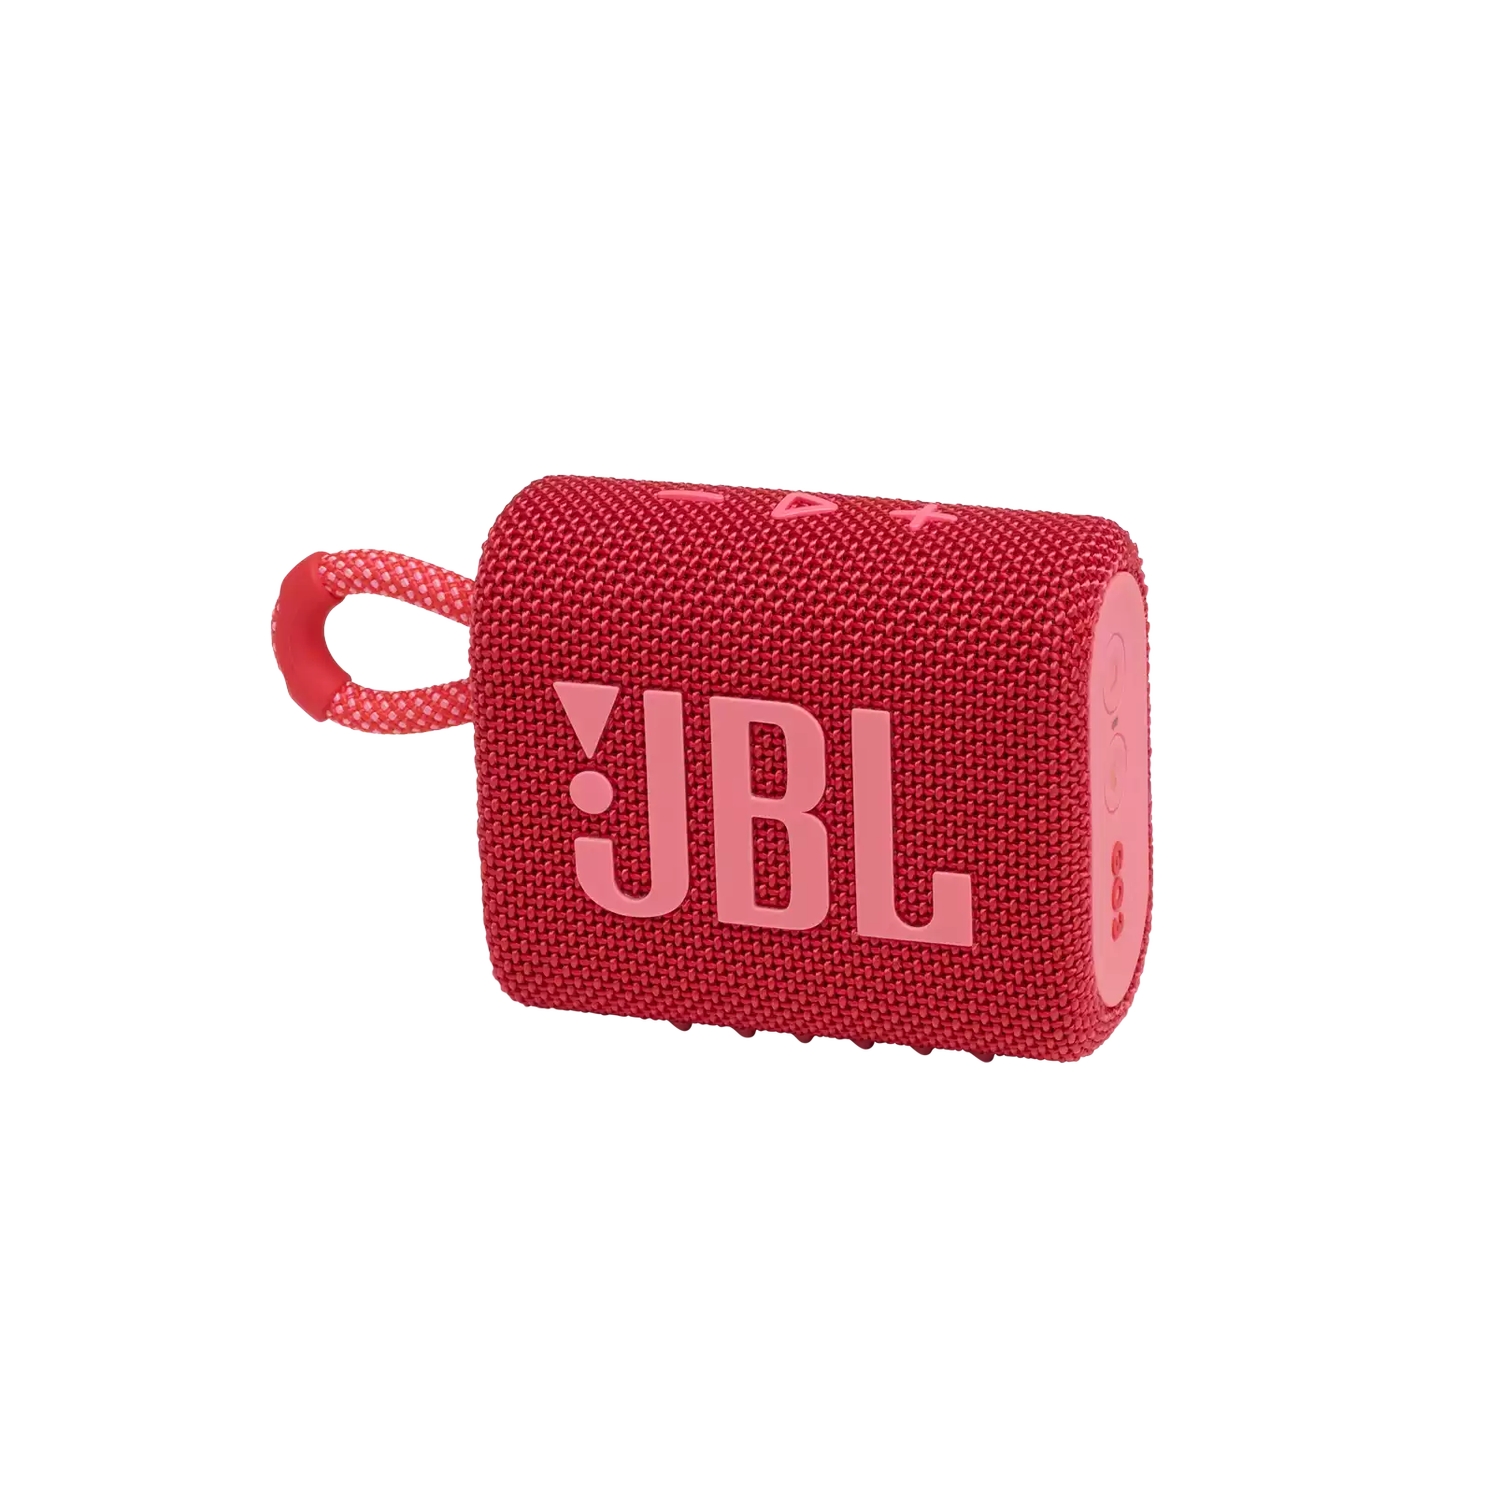 Портативная акустика JBL GO 3 красная портативная акустика jbl go 3 оранжевая